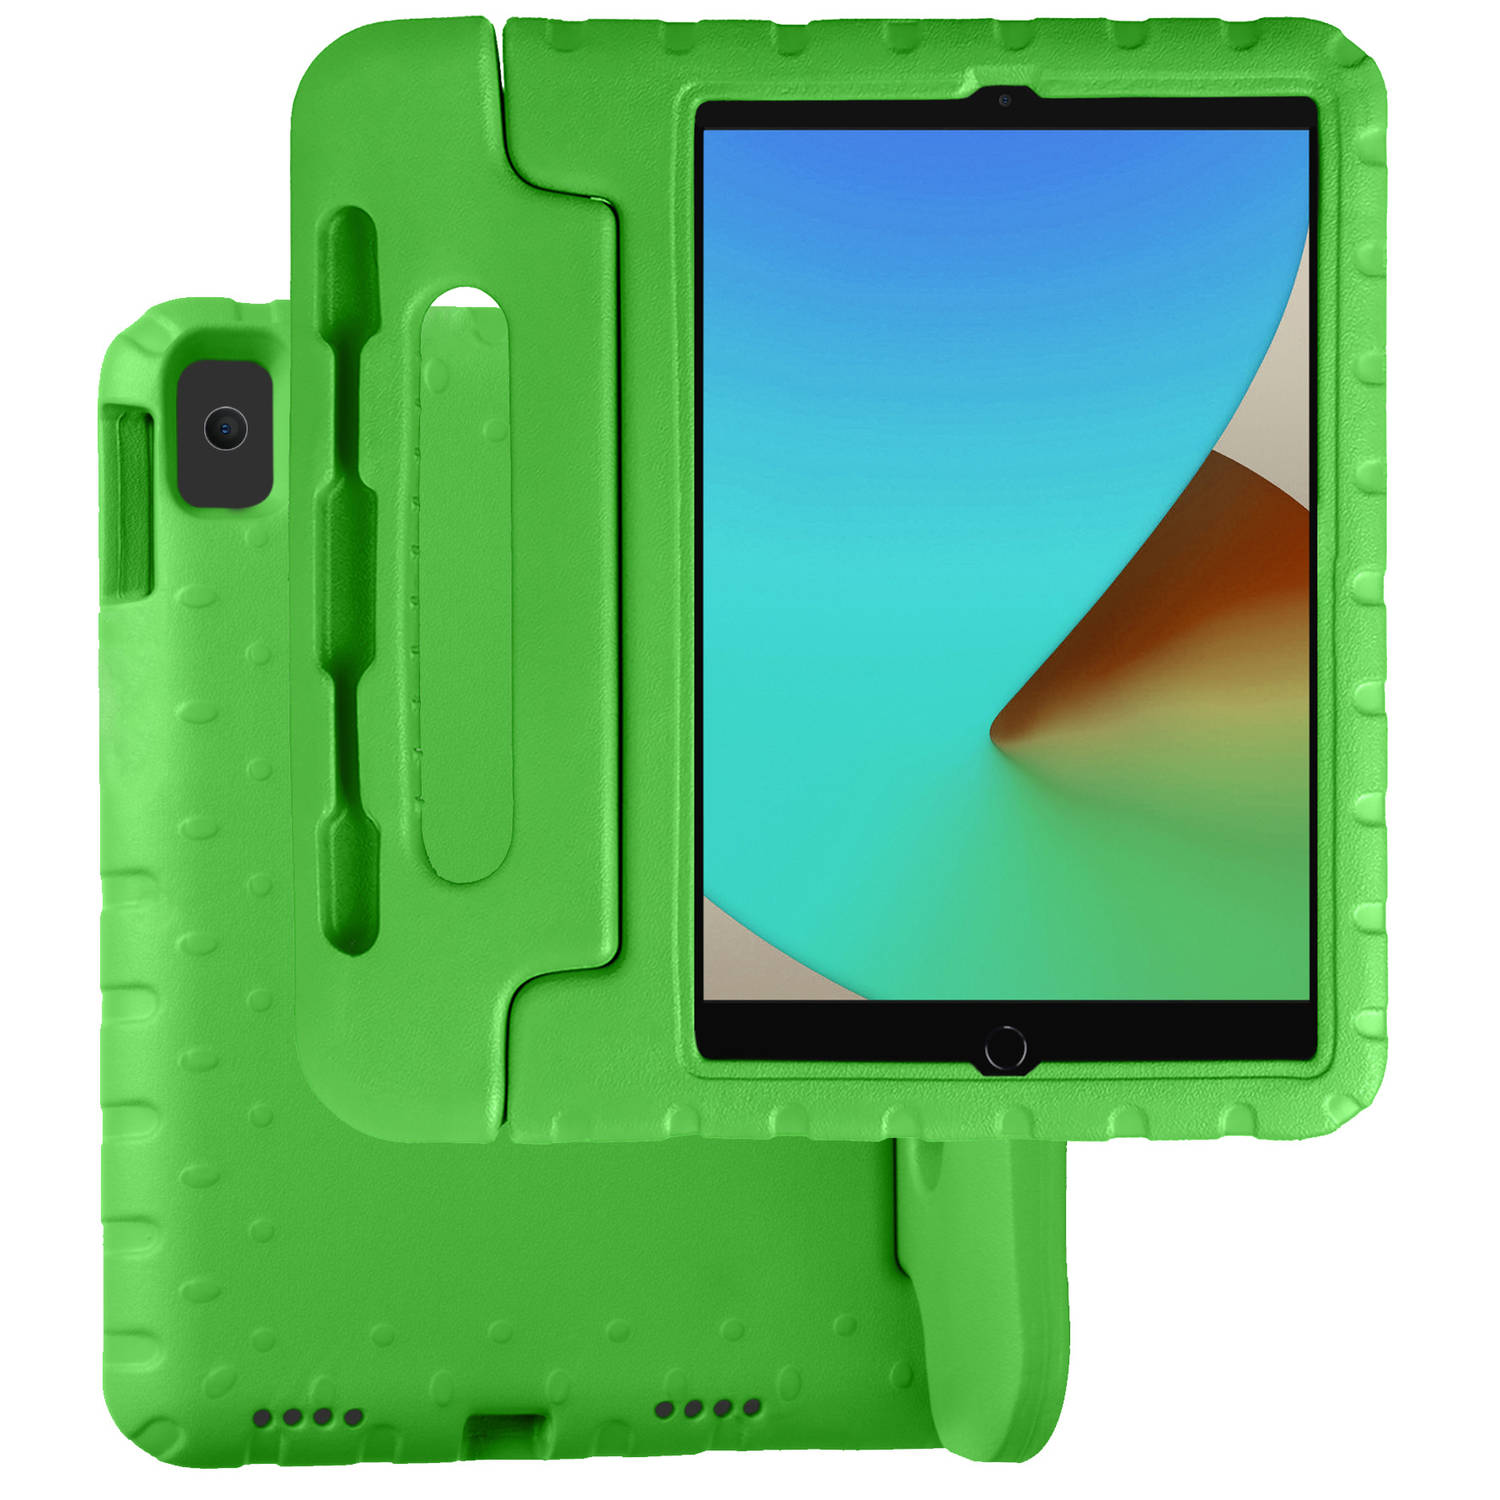 Basey iPad 10.2 2020 Hoesje Kinder Hoes Shockproof Cover - Kindvriendelijke iPad 10.2 2020 Hoes Kids Case - Groen